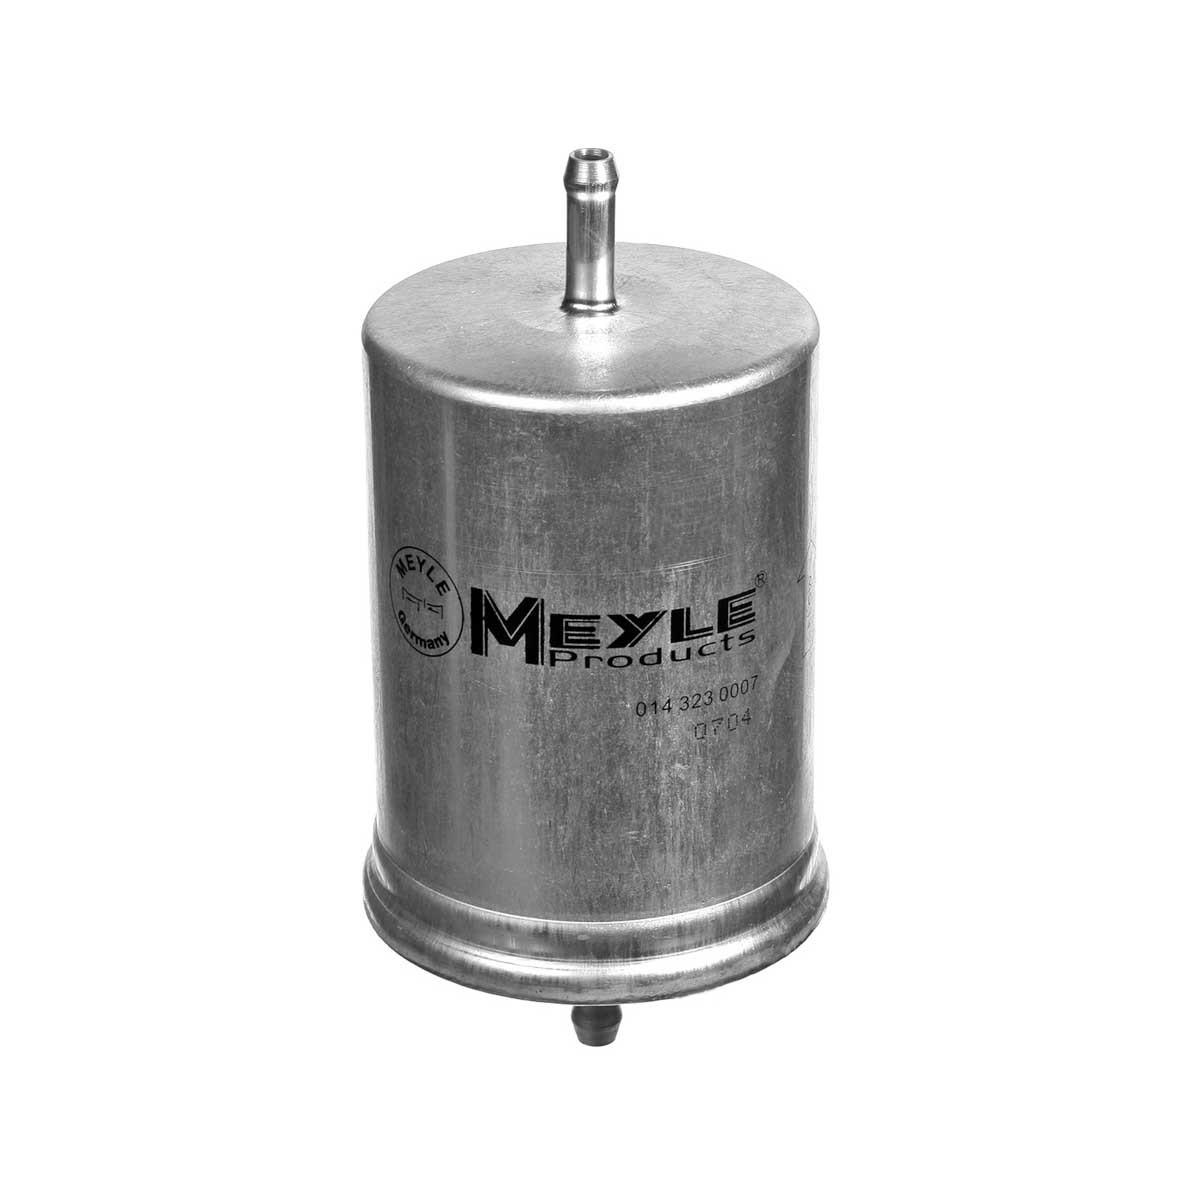 MFF0017 MEYLE In-Line Filter, ORIGINAL Quality Height: 156mm Inline fuel filter 014 323 0007 buy